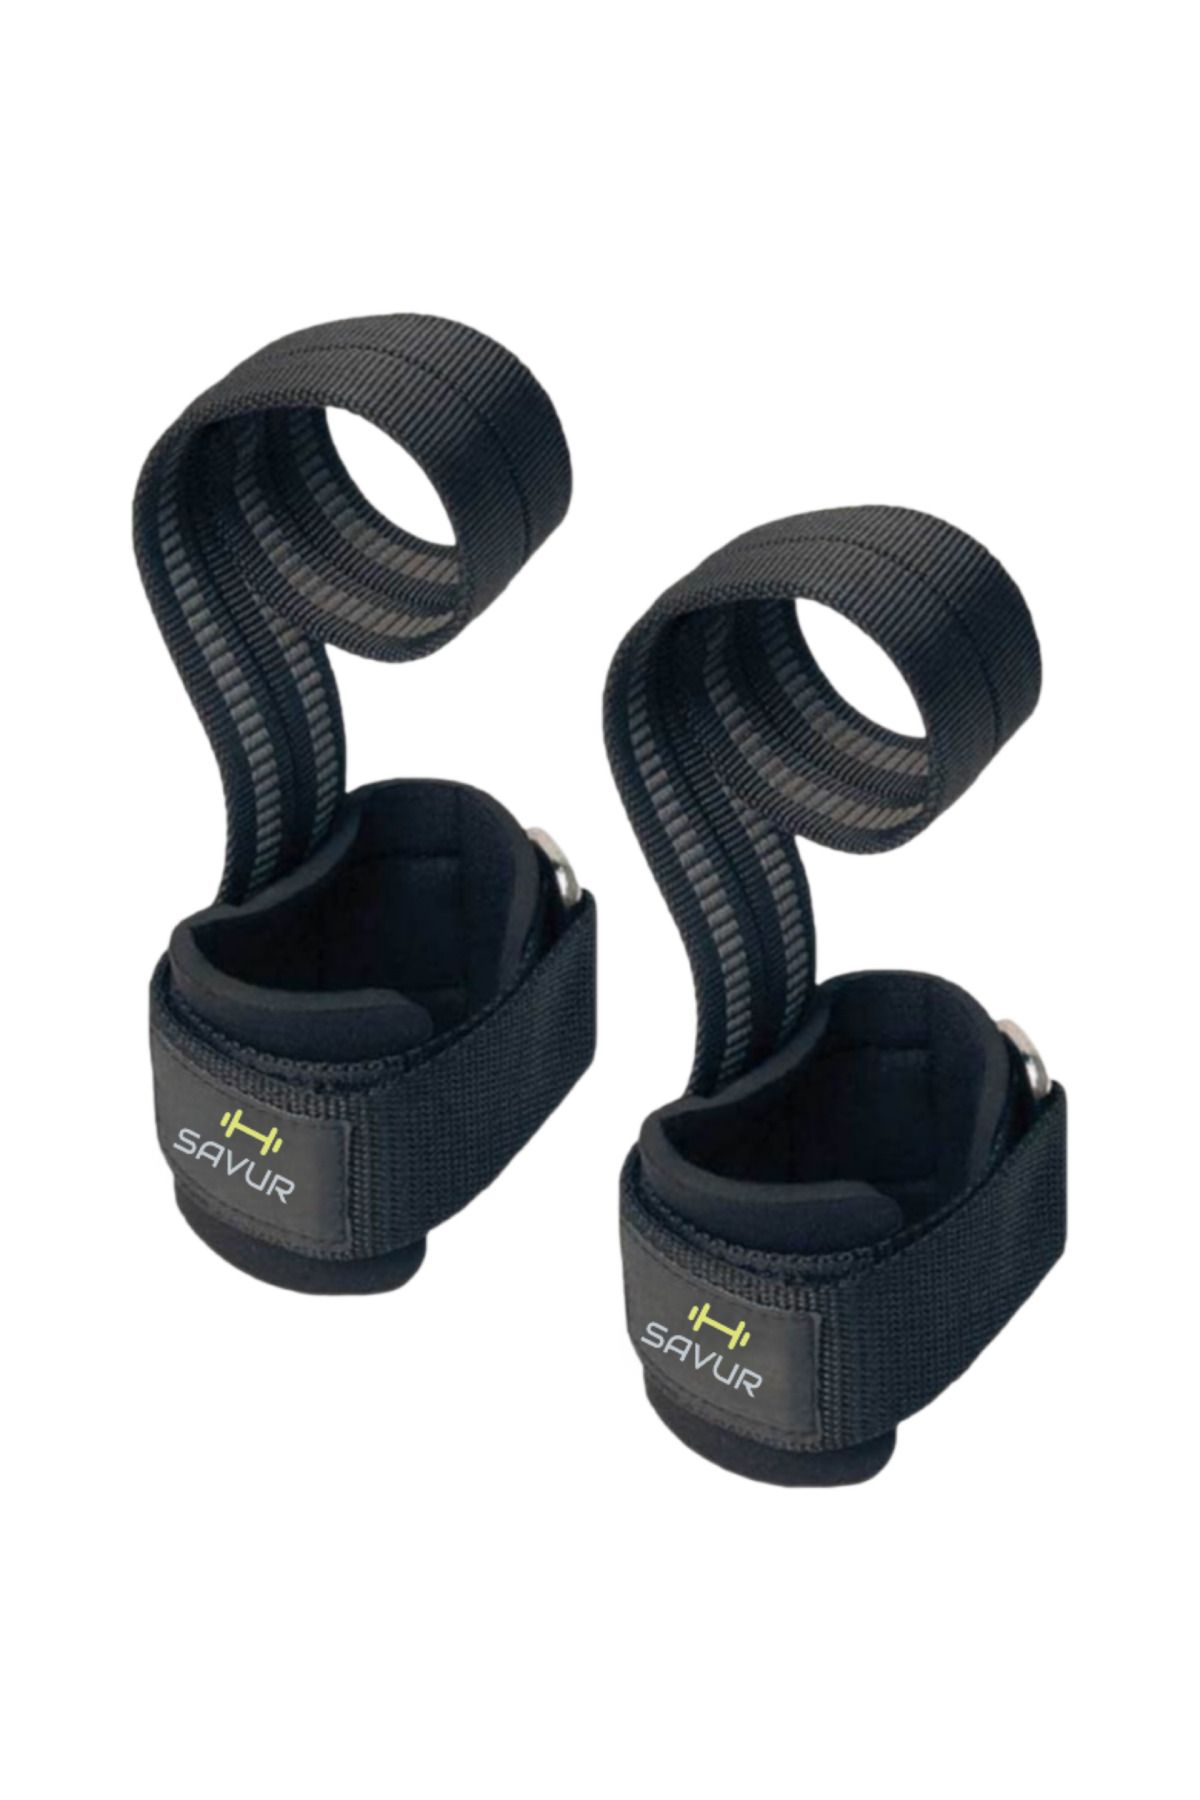 SAVUR Big Grip Pro Lifting Straps - Fitness Bilekli Halter Kayışı